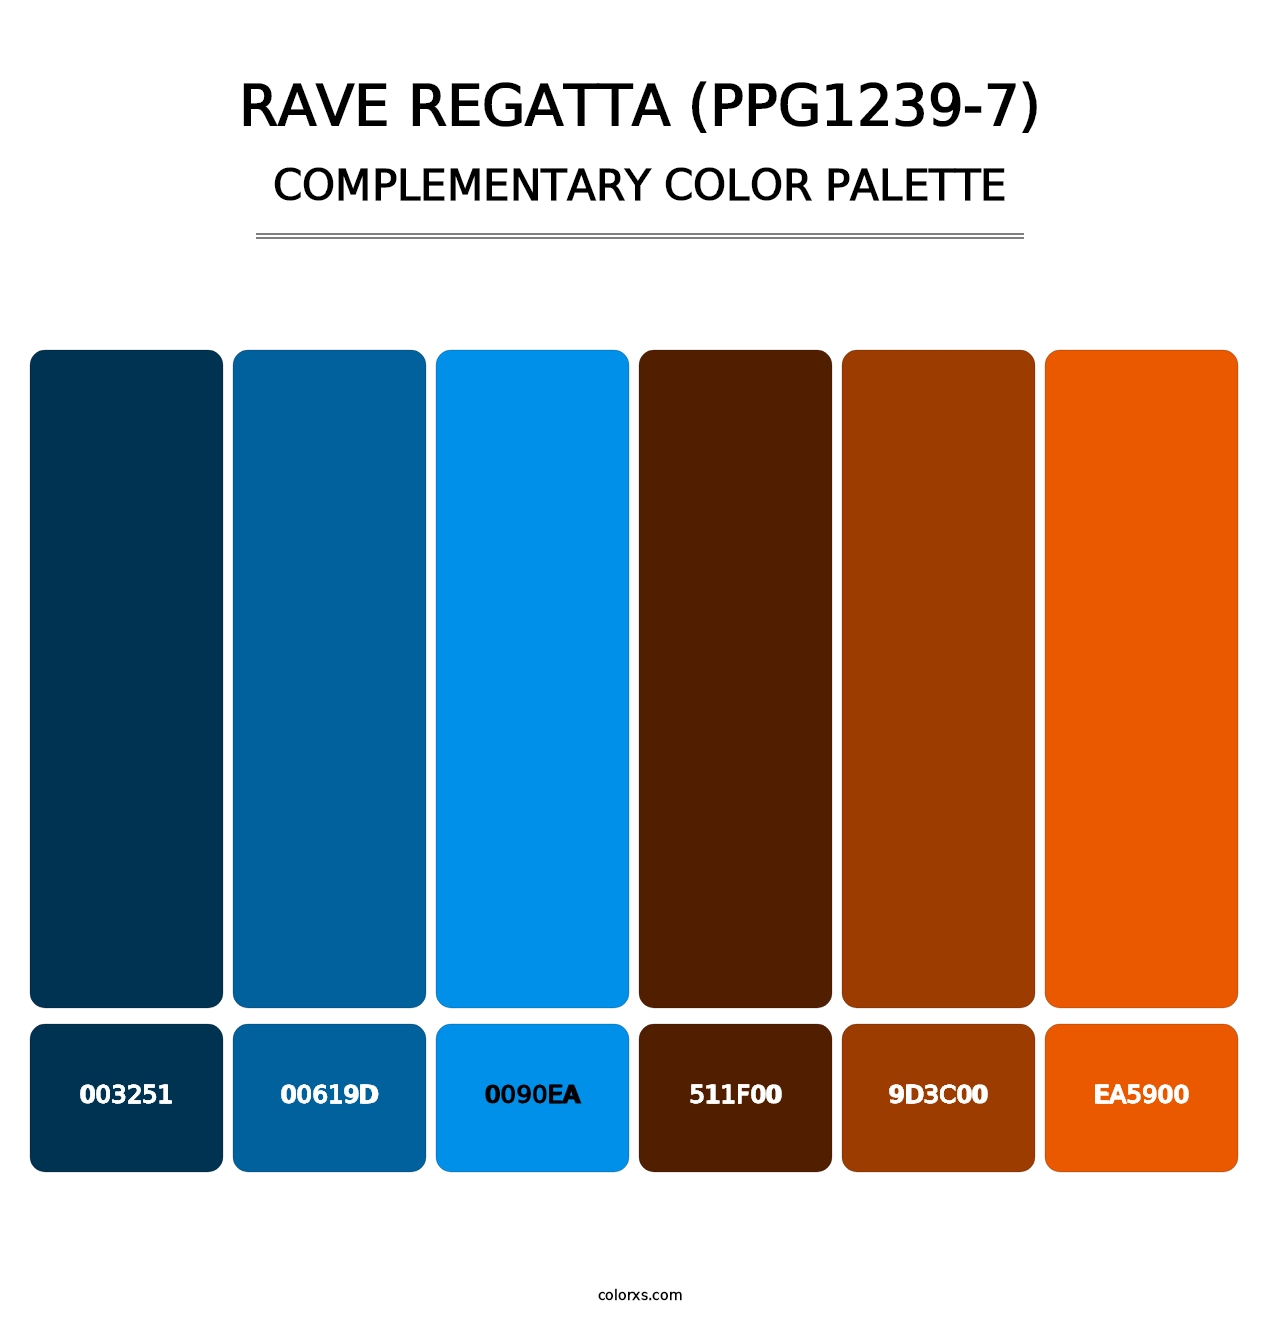 Rave Regatta (PPG1239-7) - Complementary Color Palette